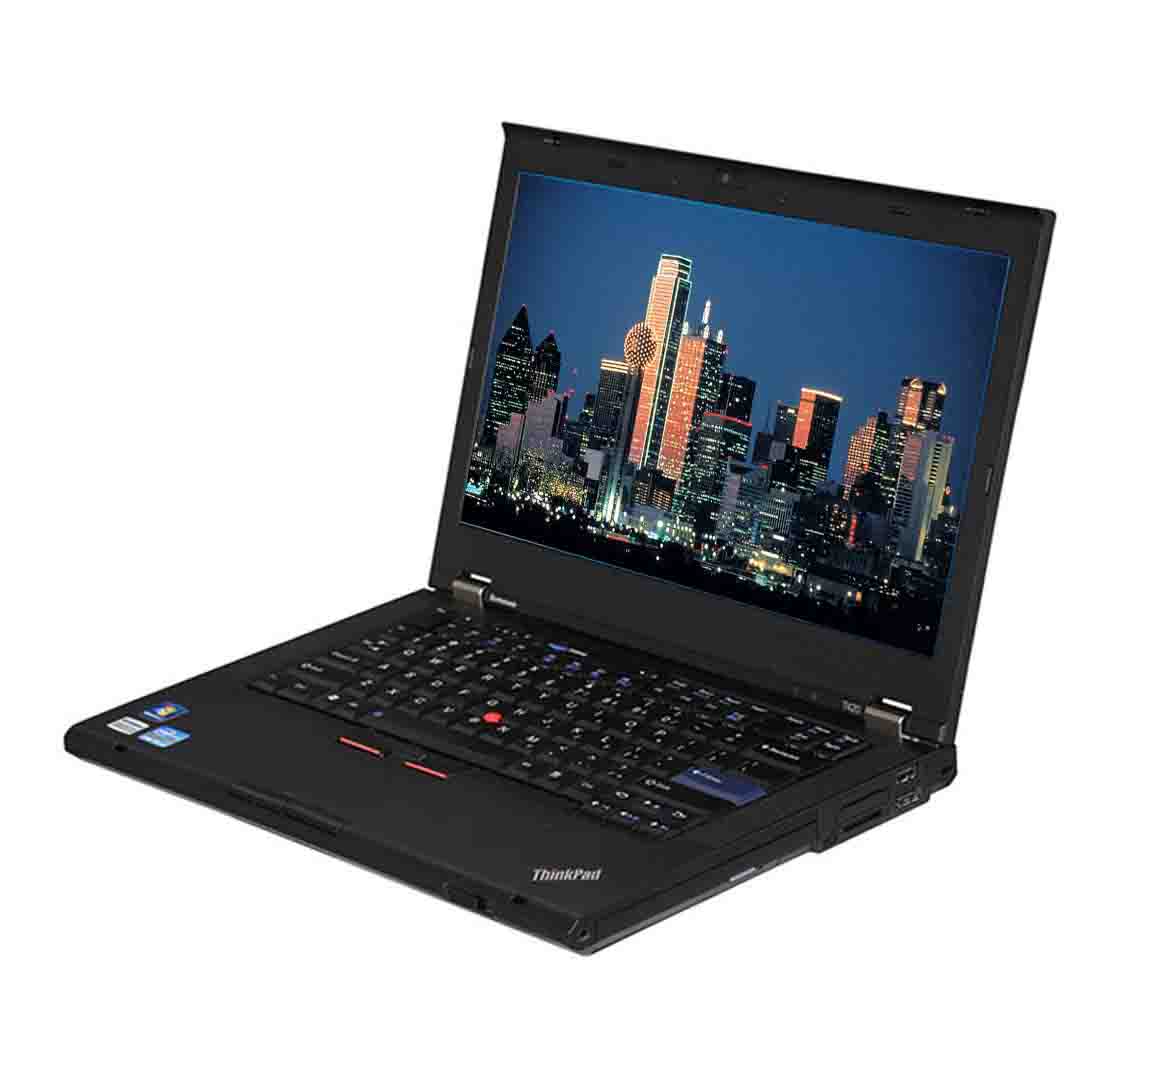 Lenovo ThinkPad T420 Business Laptop, Intel Core i5-2nd Gen CPU, 4GB RAM, 320GB HDD, 14.1 inch Display, Windows 10 Pro, Refurbished Laptop